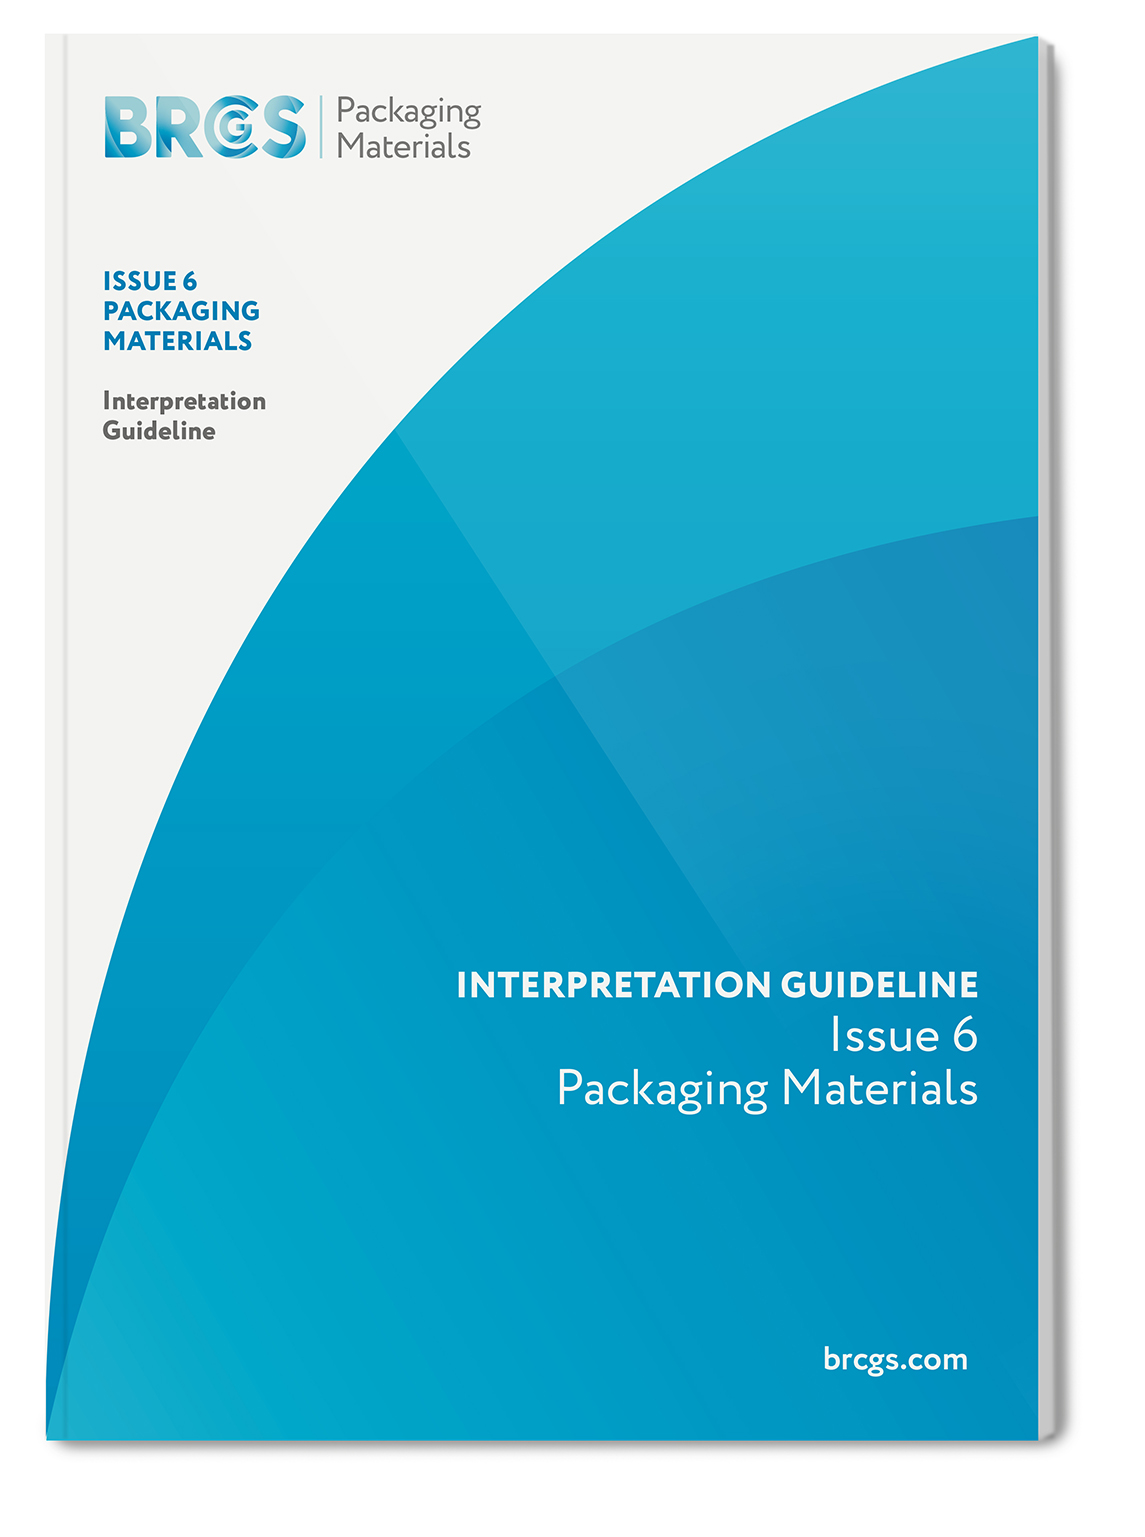 Global Standard for Packaging Materials (Issue 6) Interpretation Guideline 